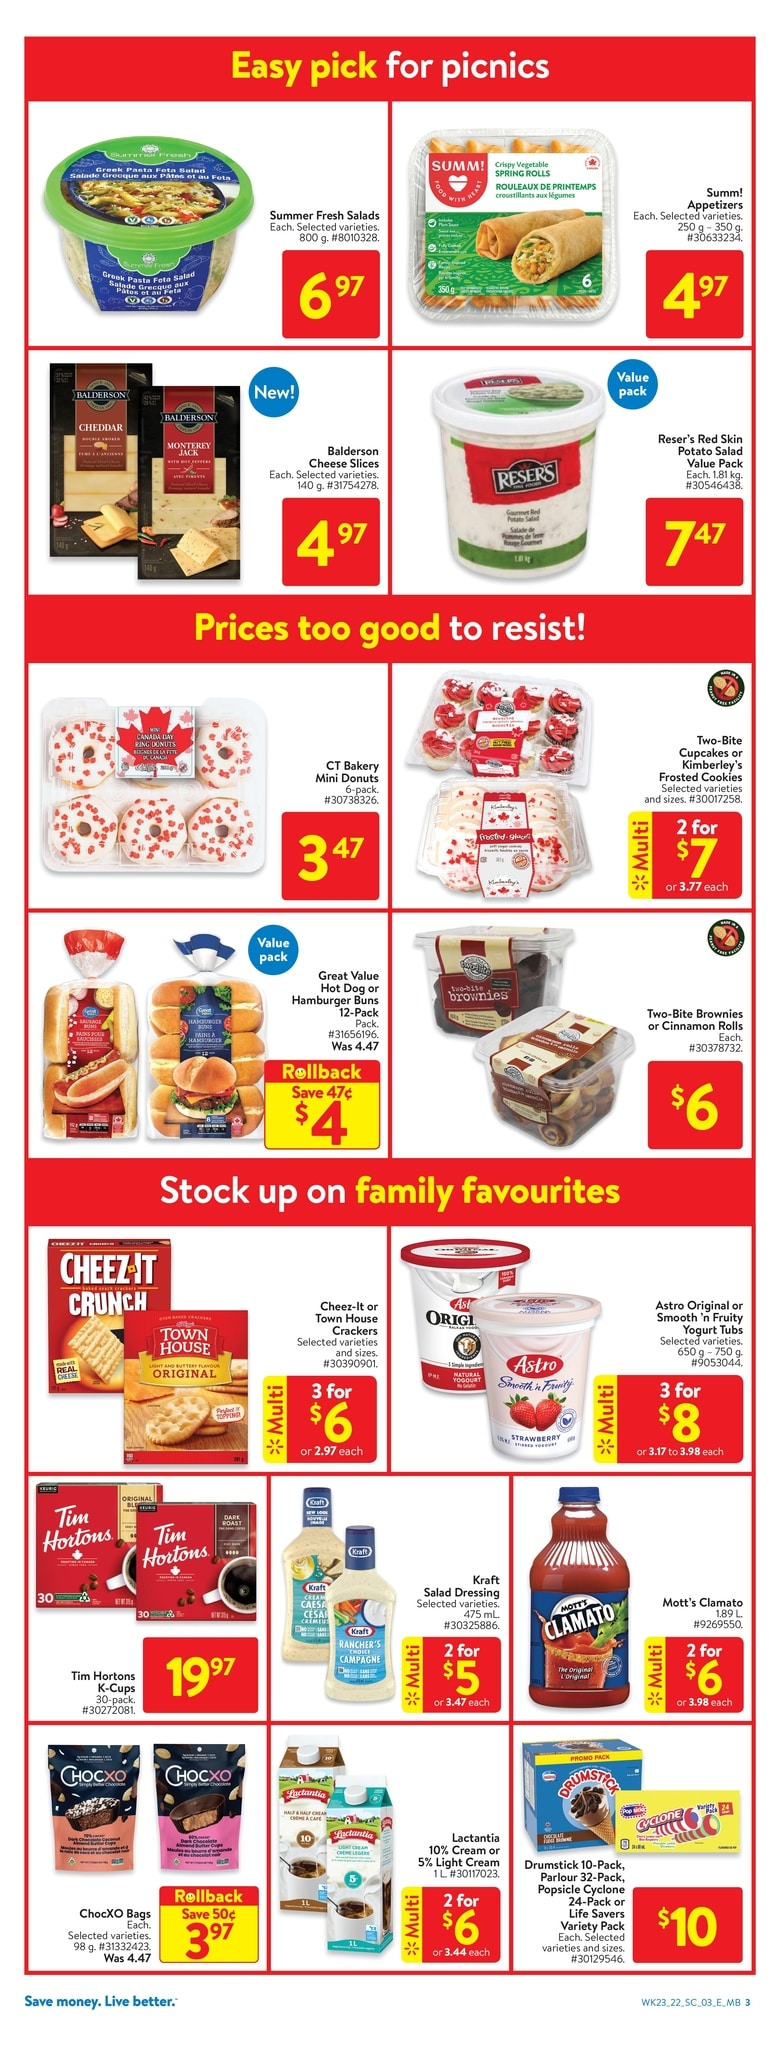 Walmart - Weekly Flyer Specials - Page 3